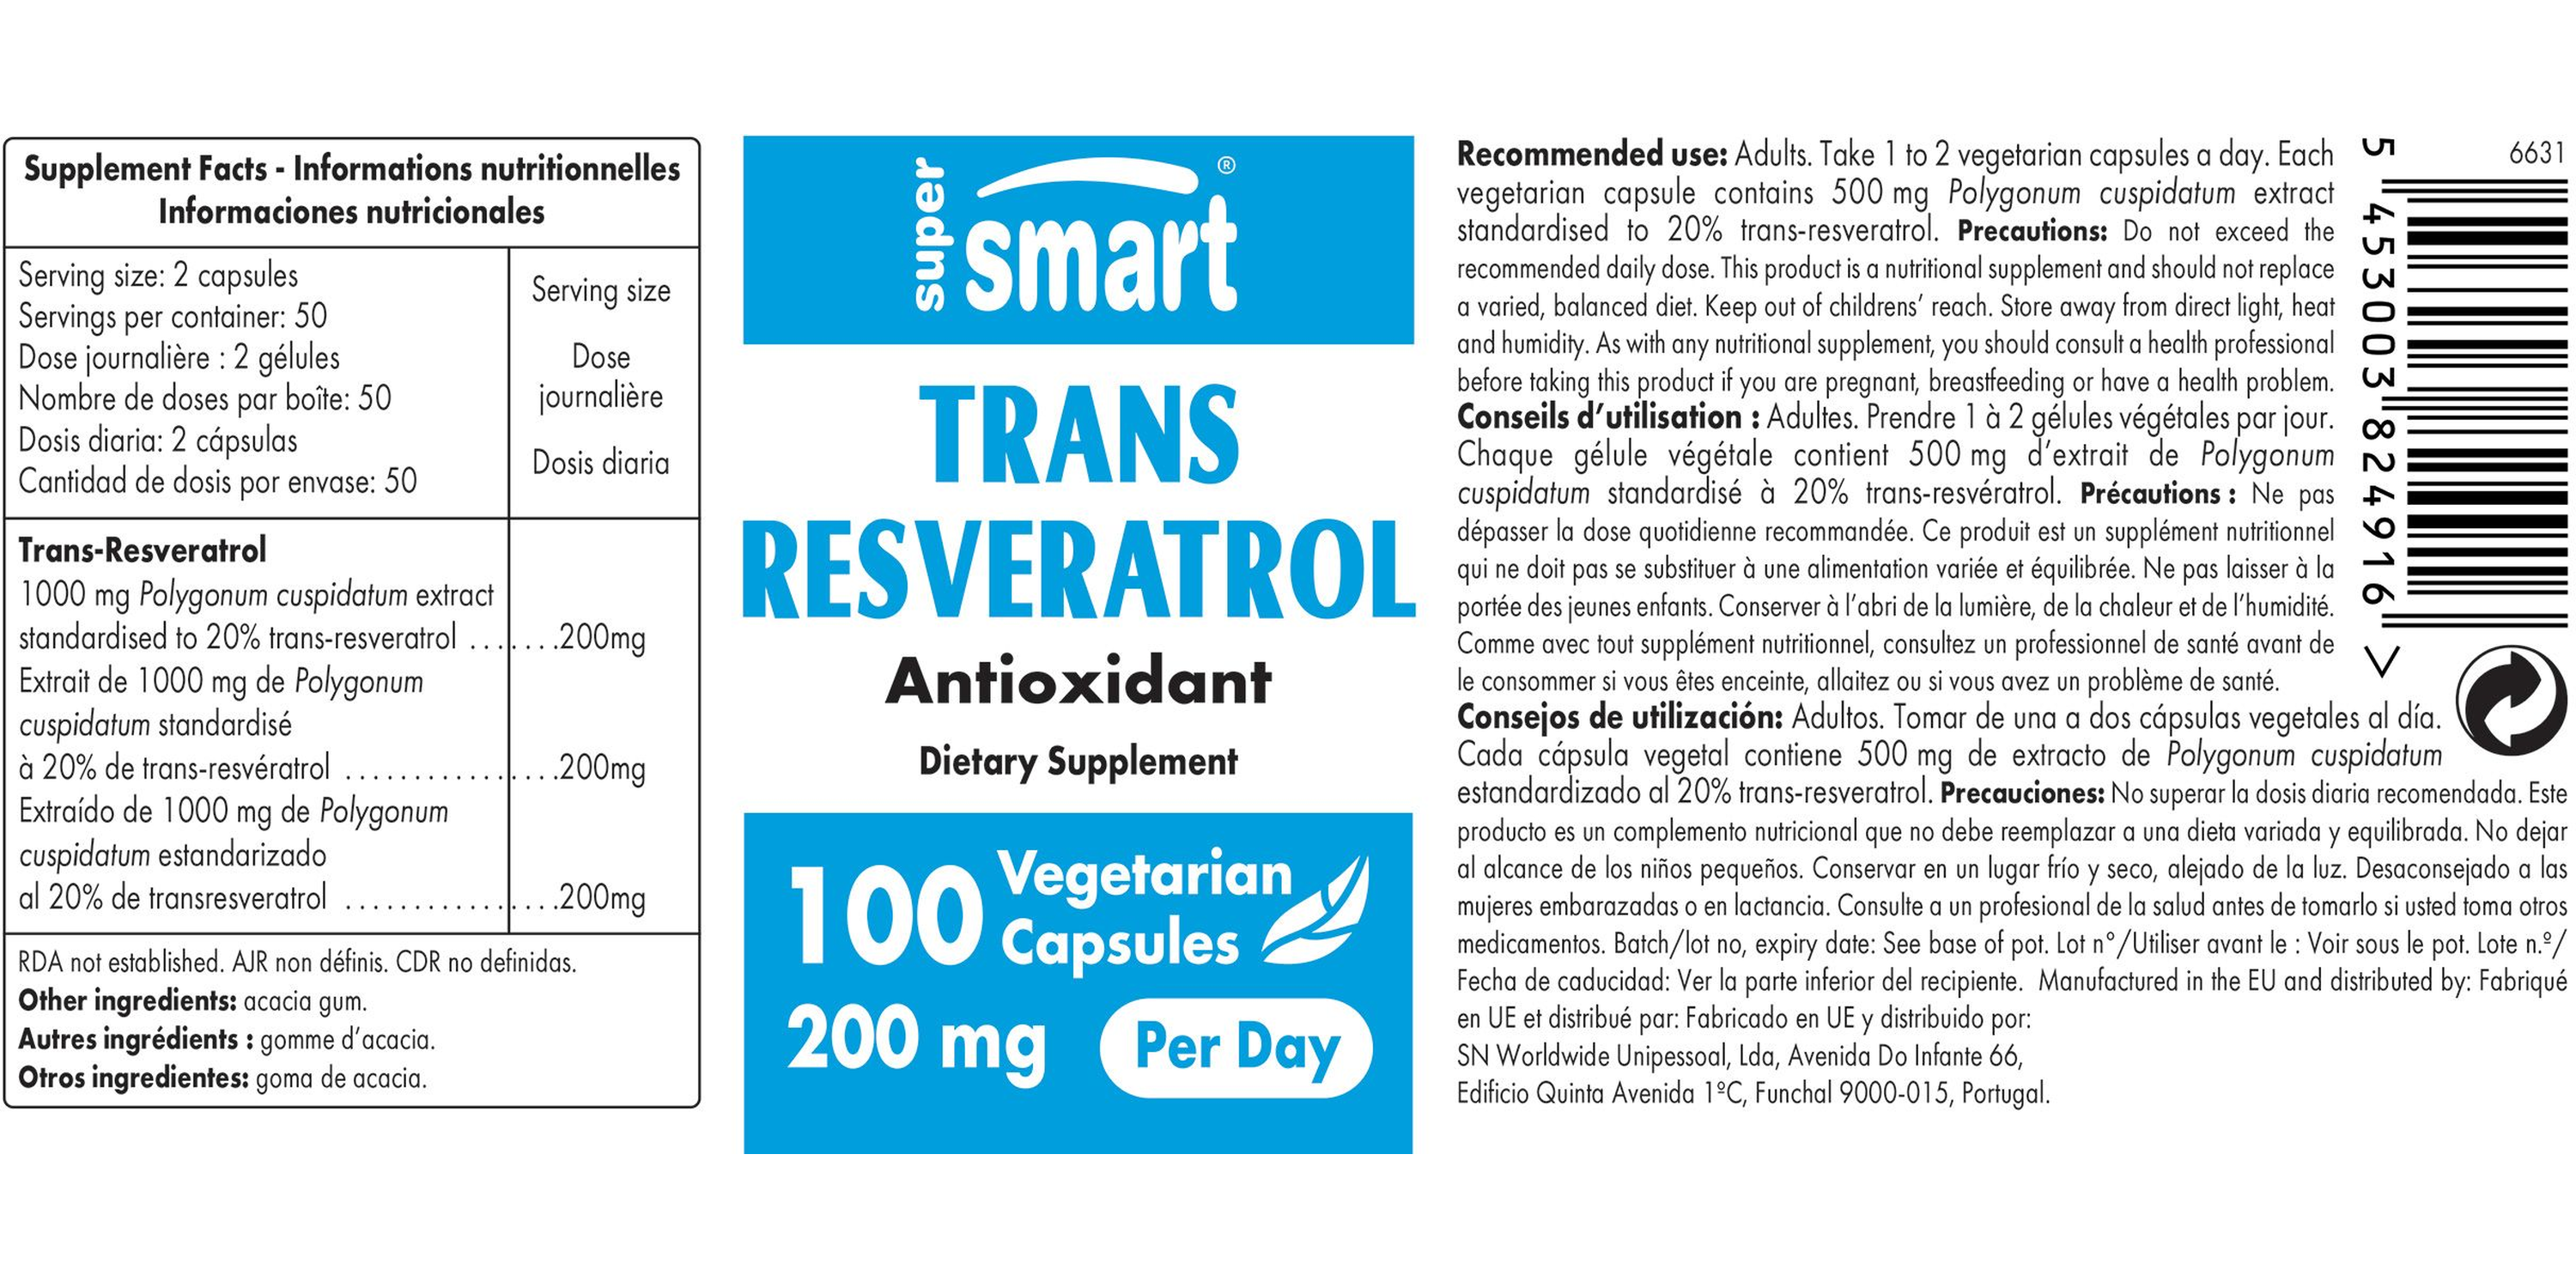 Trans-Resveratrol